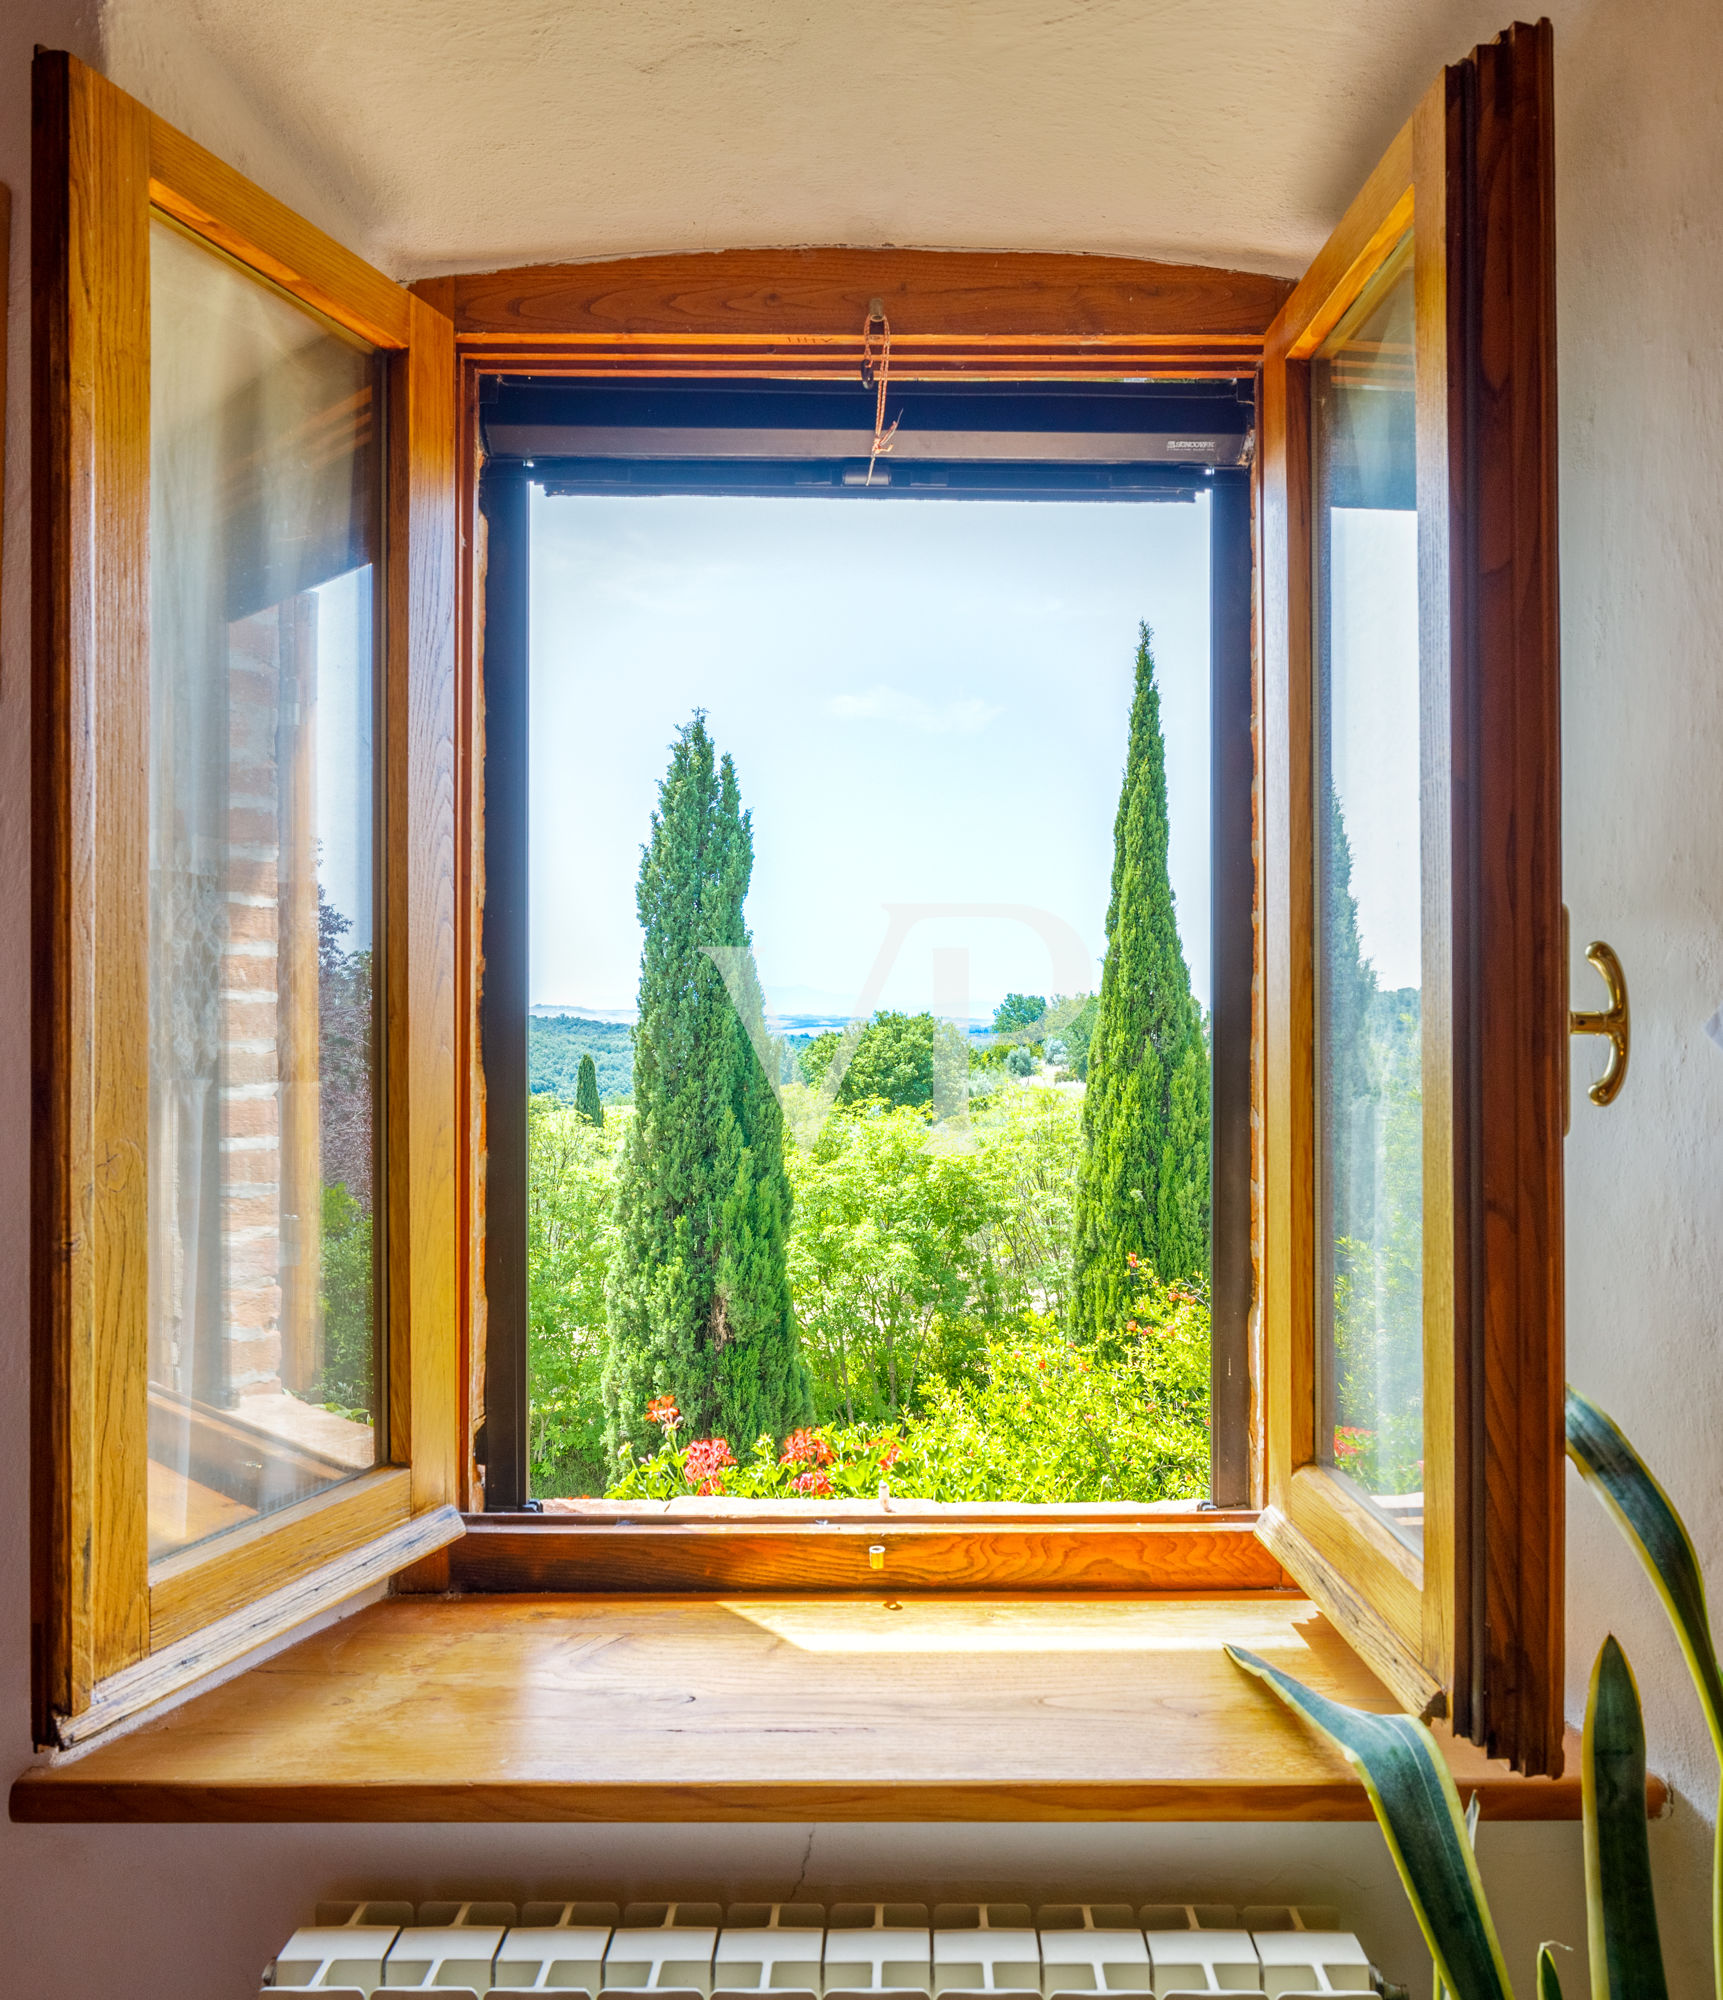 Chianti, Toscana: magnífica finca histórica con villa independiente y dos anexos rodeados de vegetación